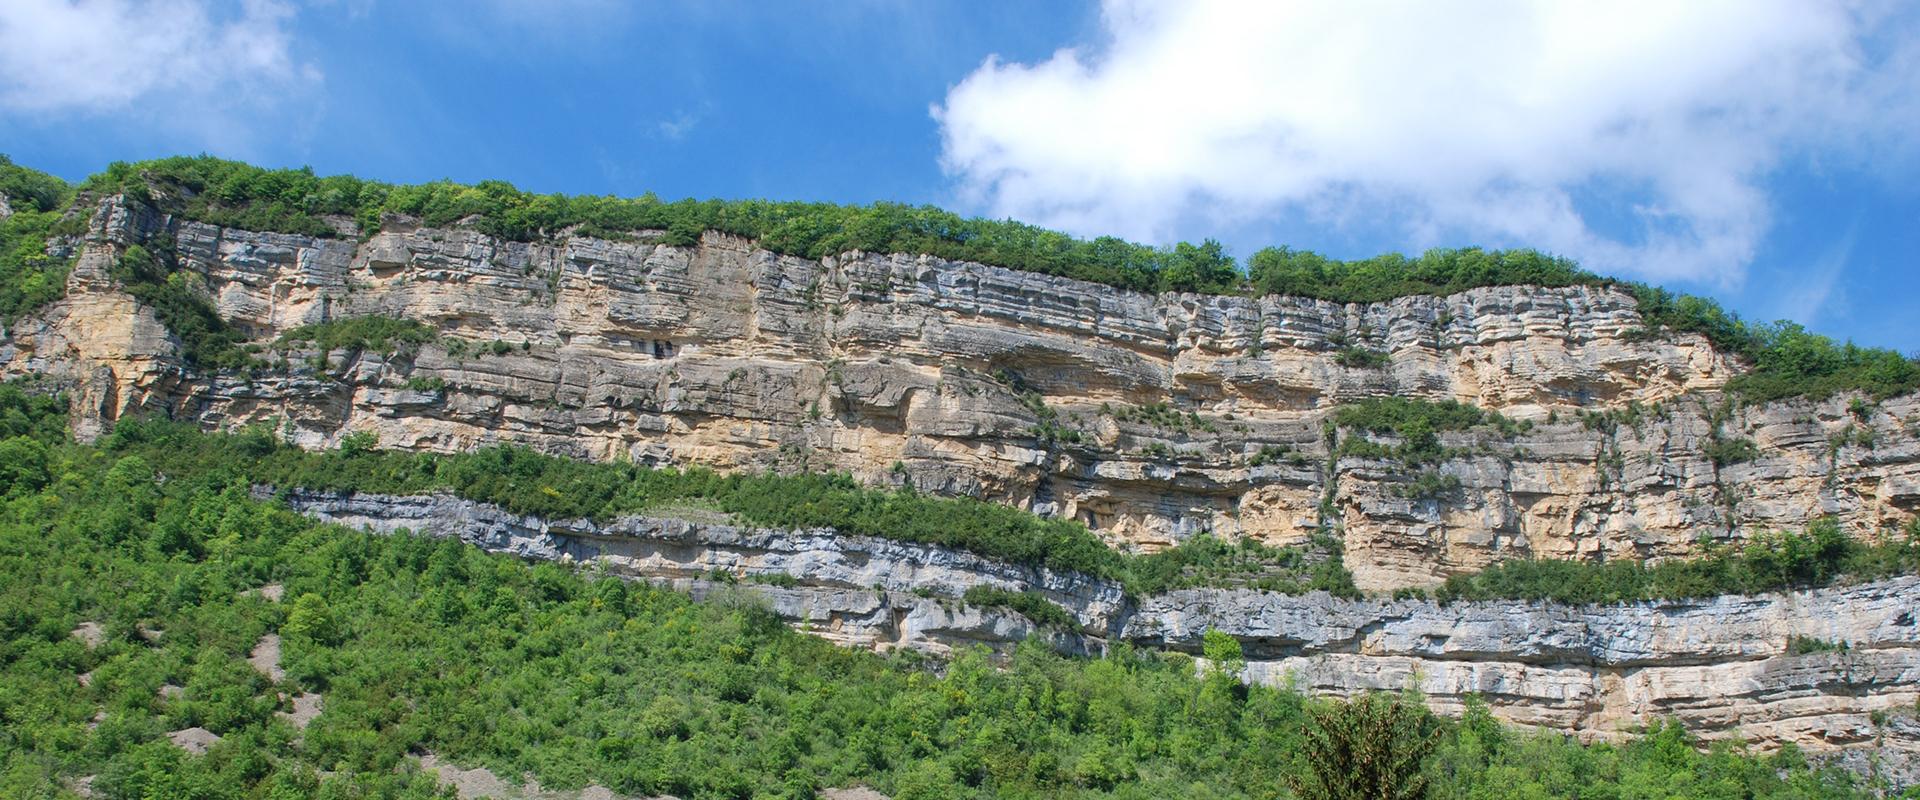 Paroi calcaire dominant la vallée de l’Albarine, Ain